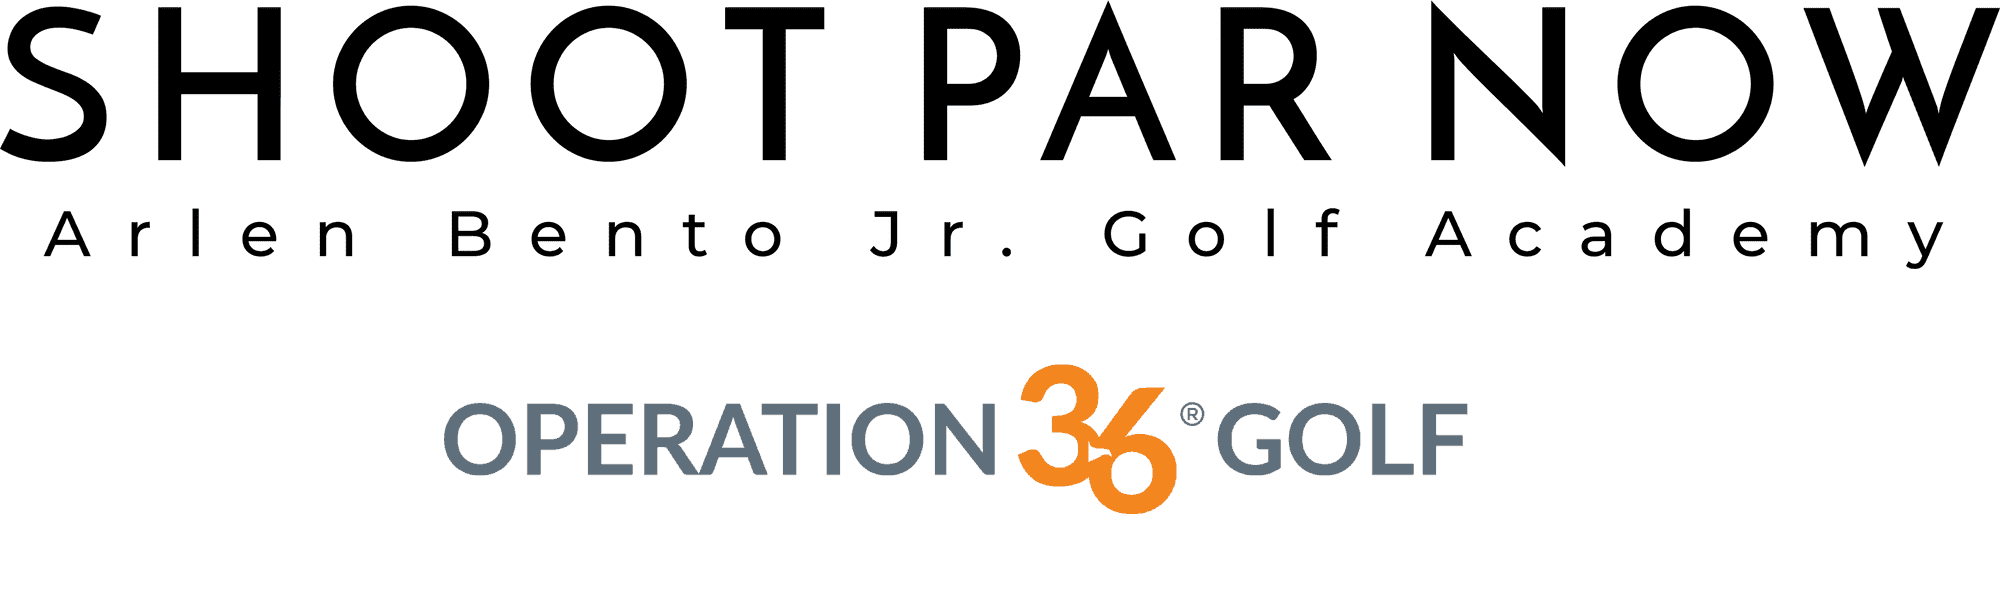 Shoot Par Now Operation 36 Arlen Bento Jr. Golf Lessons Port St. Lucie Florida